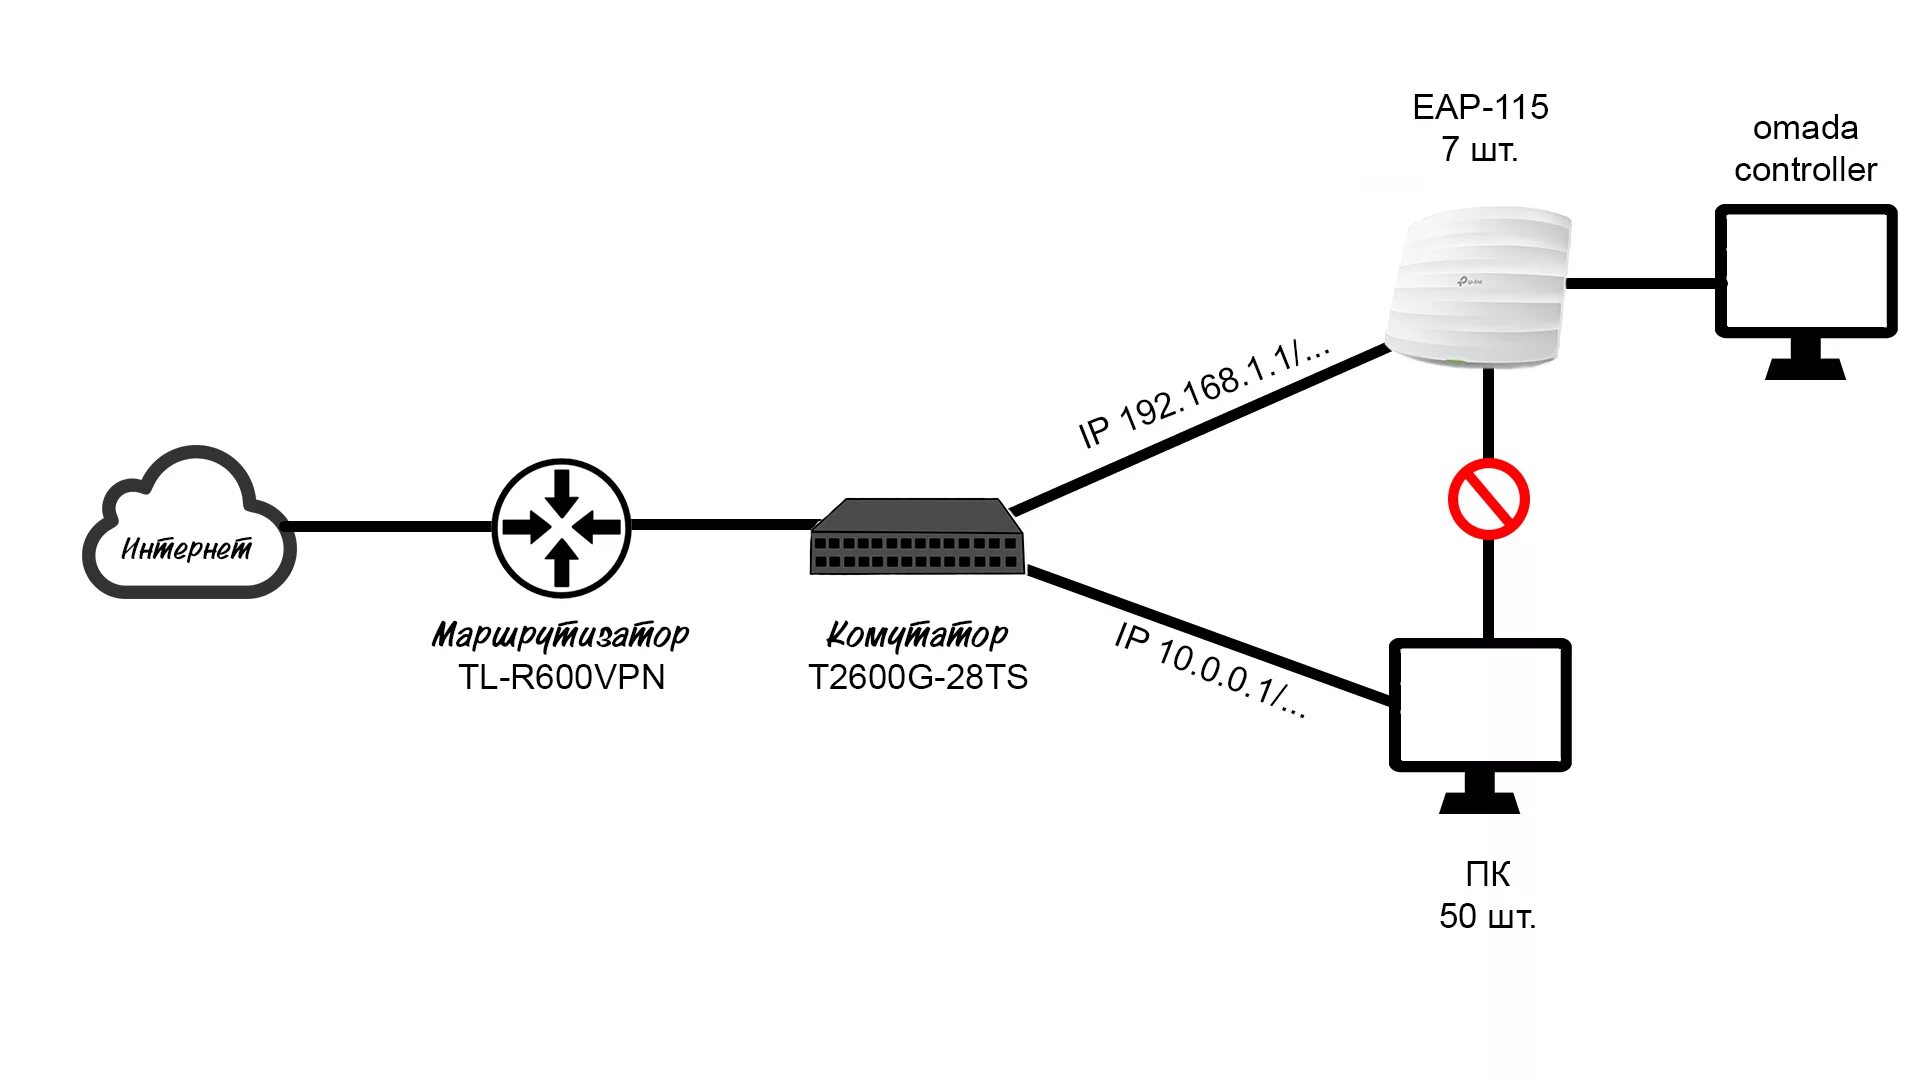 TP-link t2600g-28ts. Виртуальная частная сеть (VPN). R600vpn VLAN VPN. VPN маршрутизатор omada. Xeovo vpn